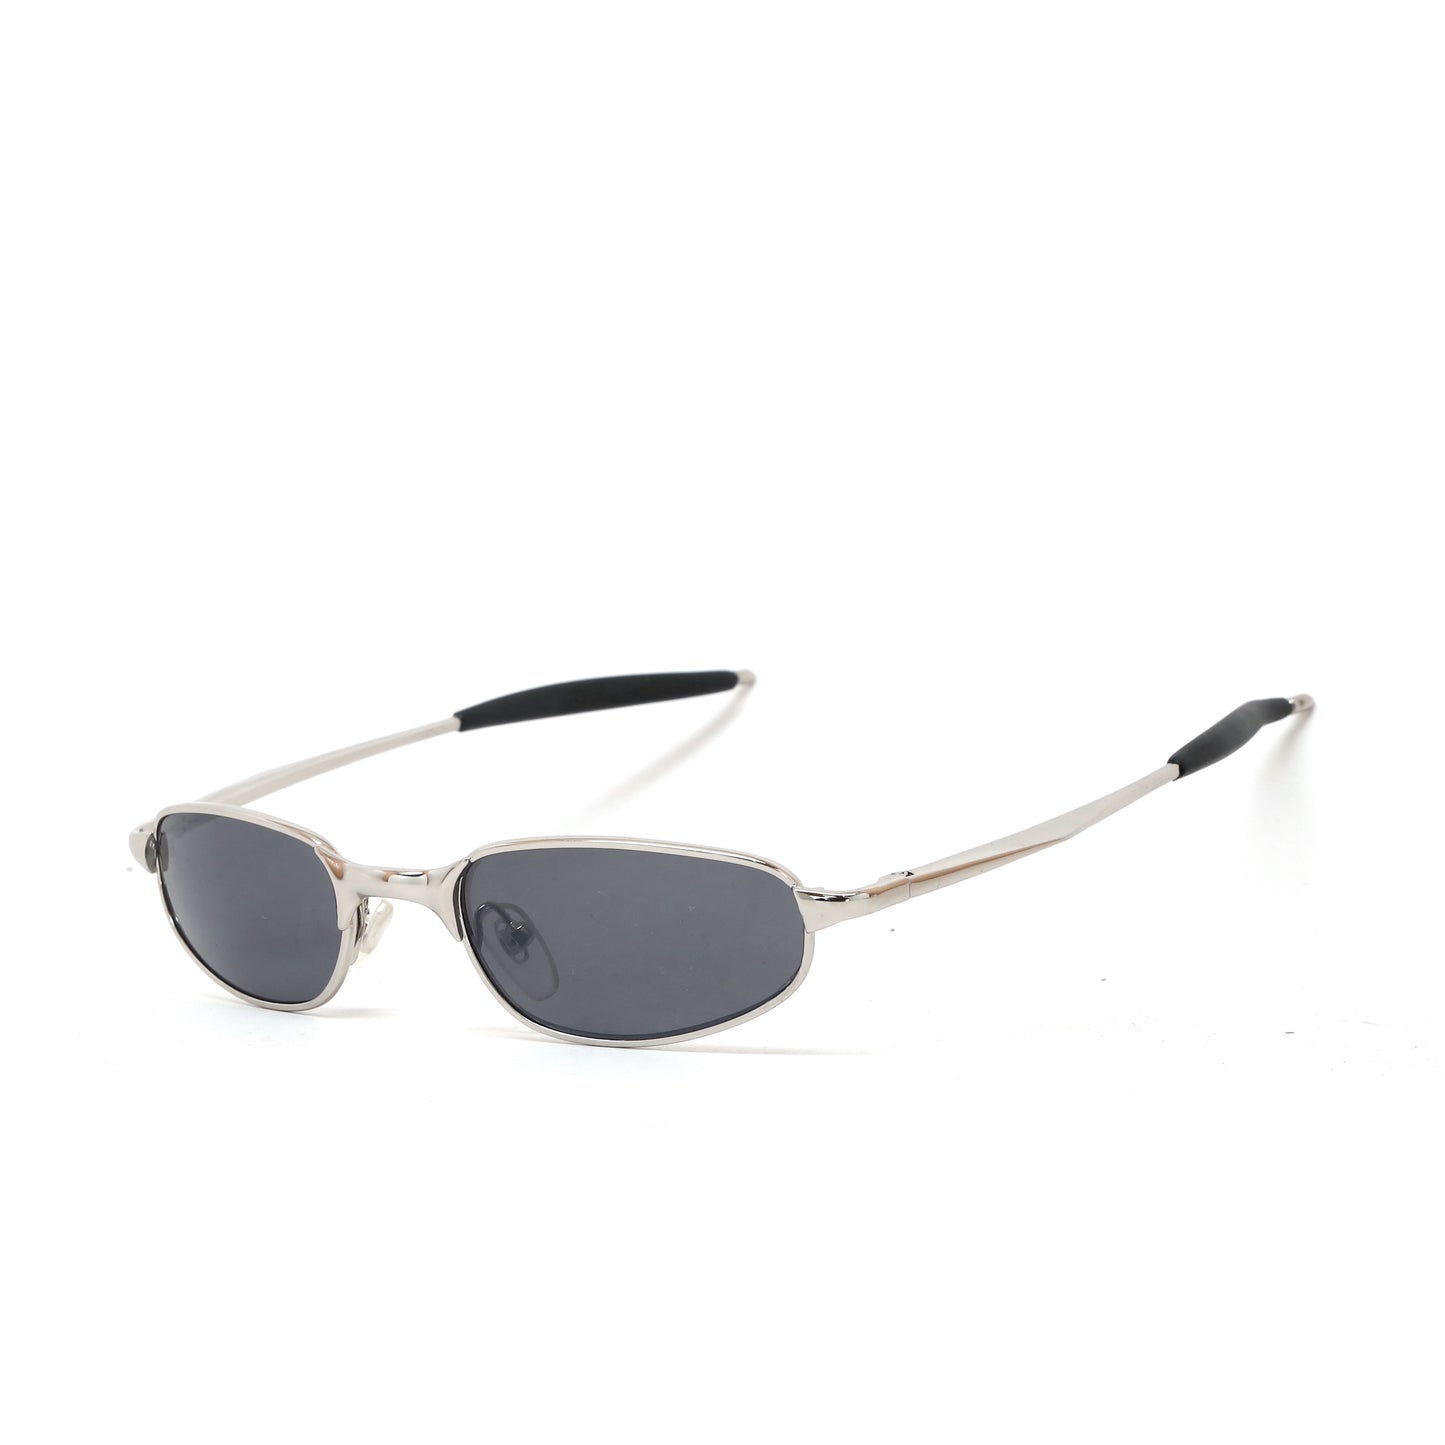 Vintage Small Size 90s Matrix Style Sunglasses - Chrome